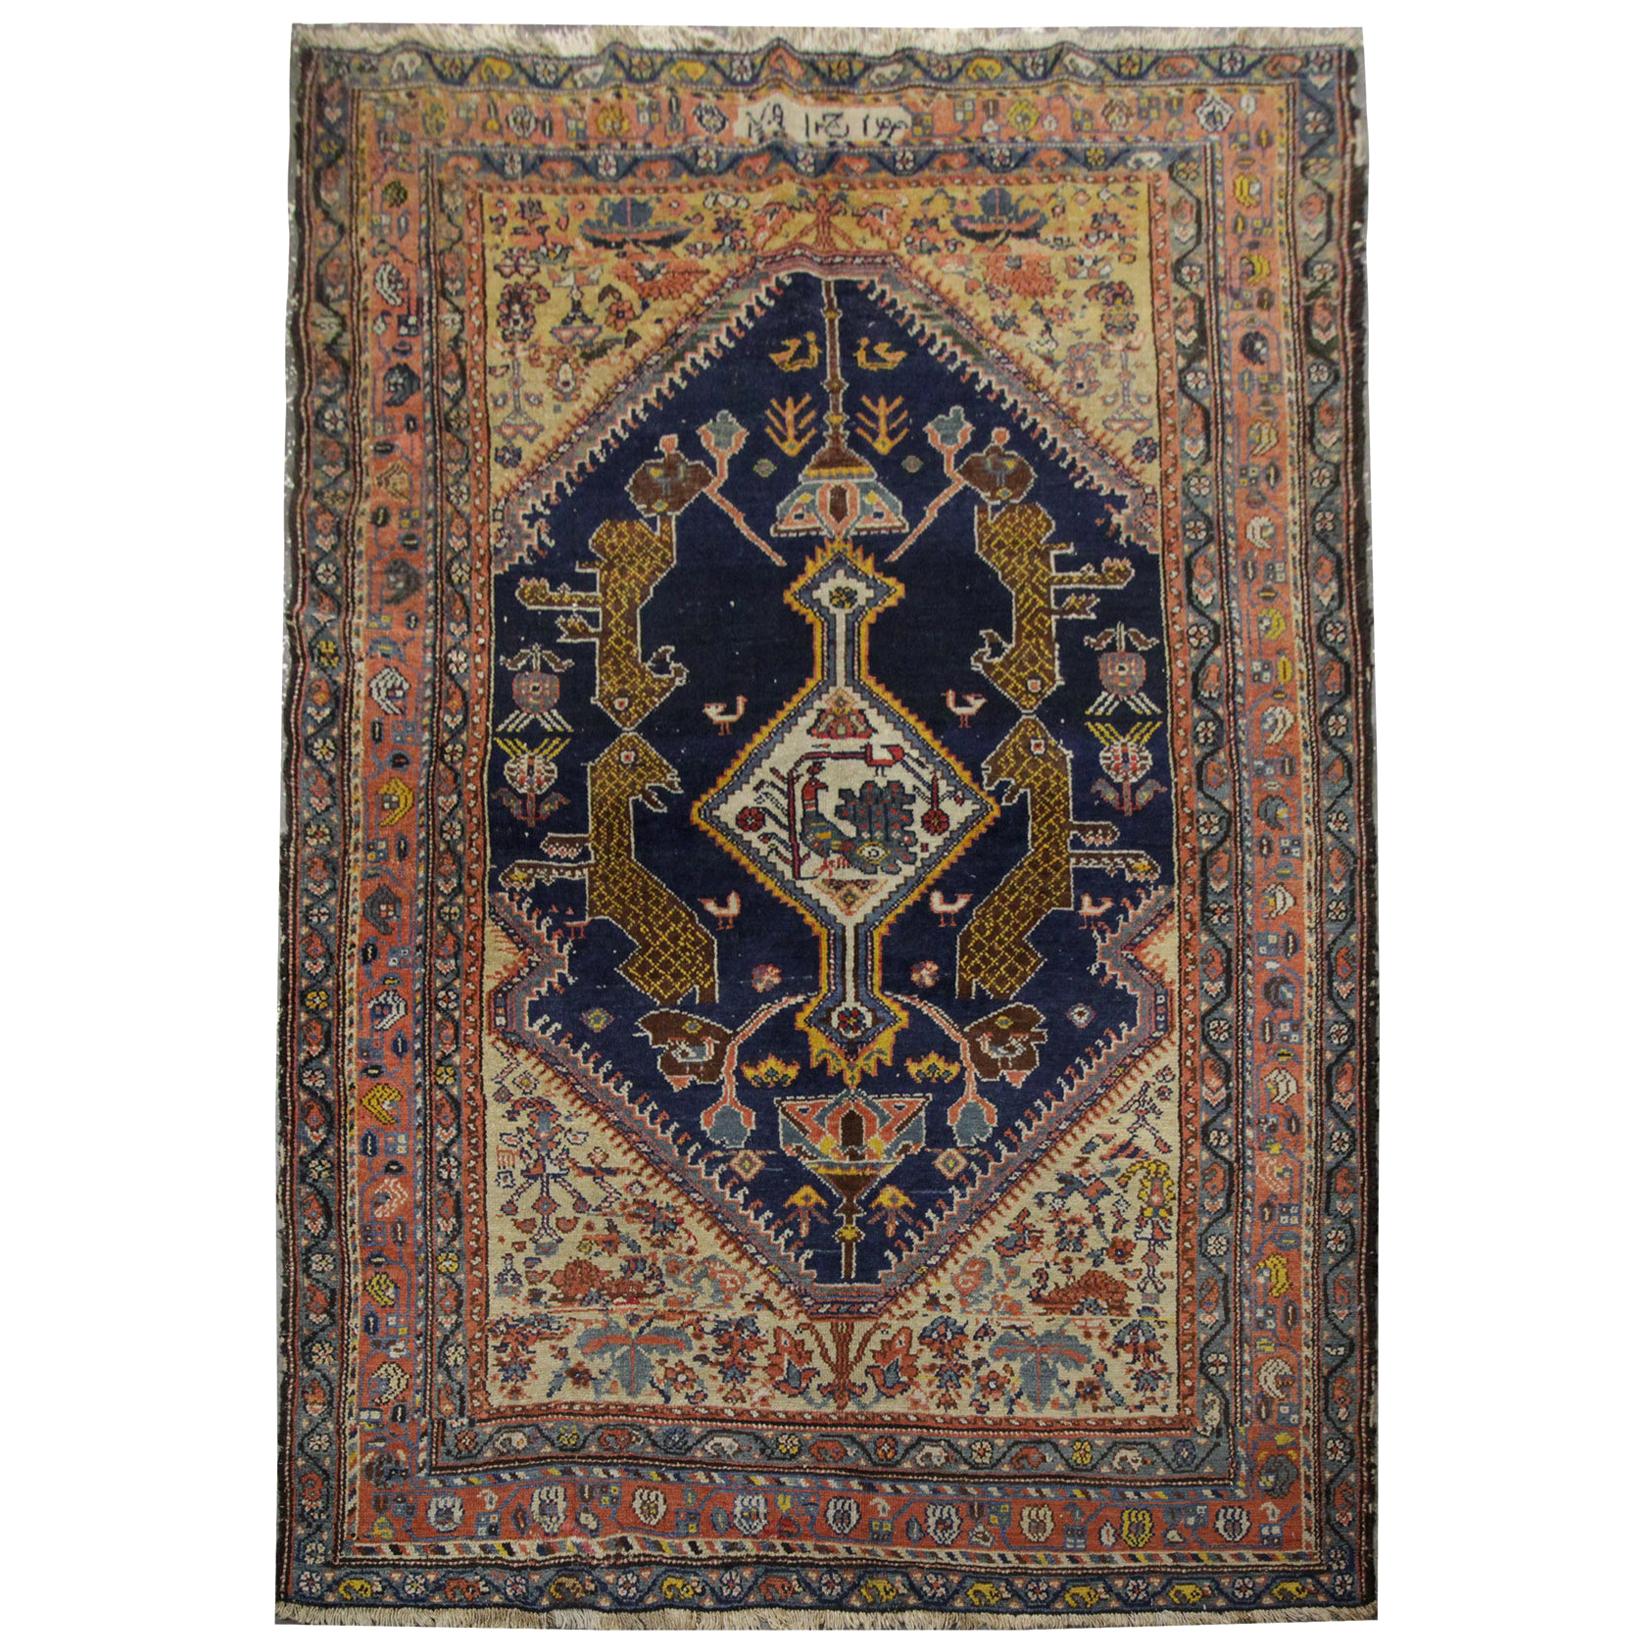 Antique Carpet Armenian Rug, Blue and Orange Caucasian Carpet Living Room Rug 